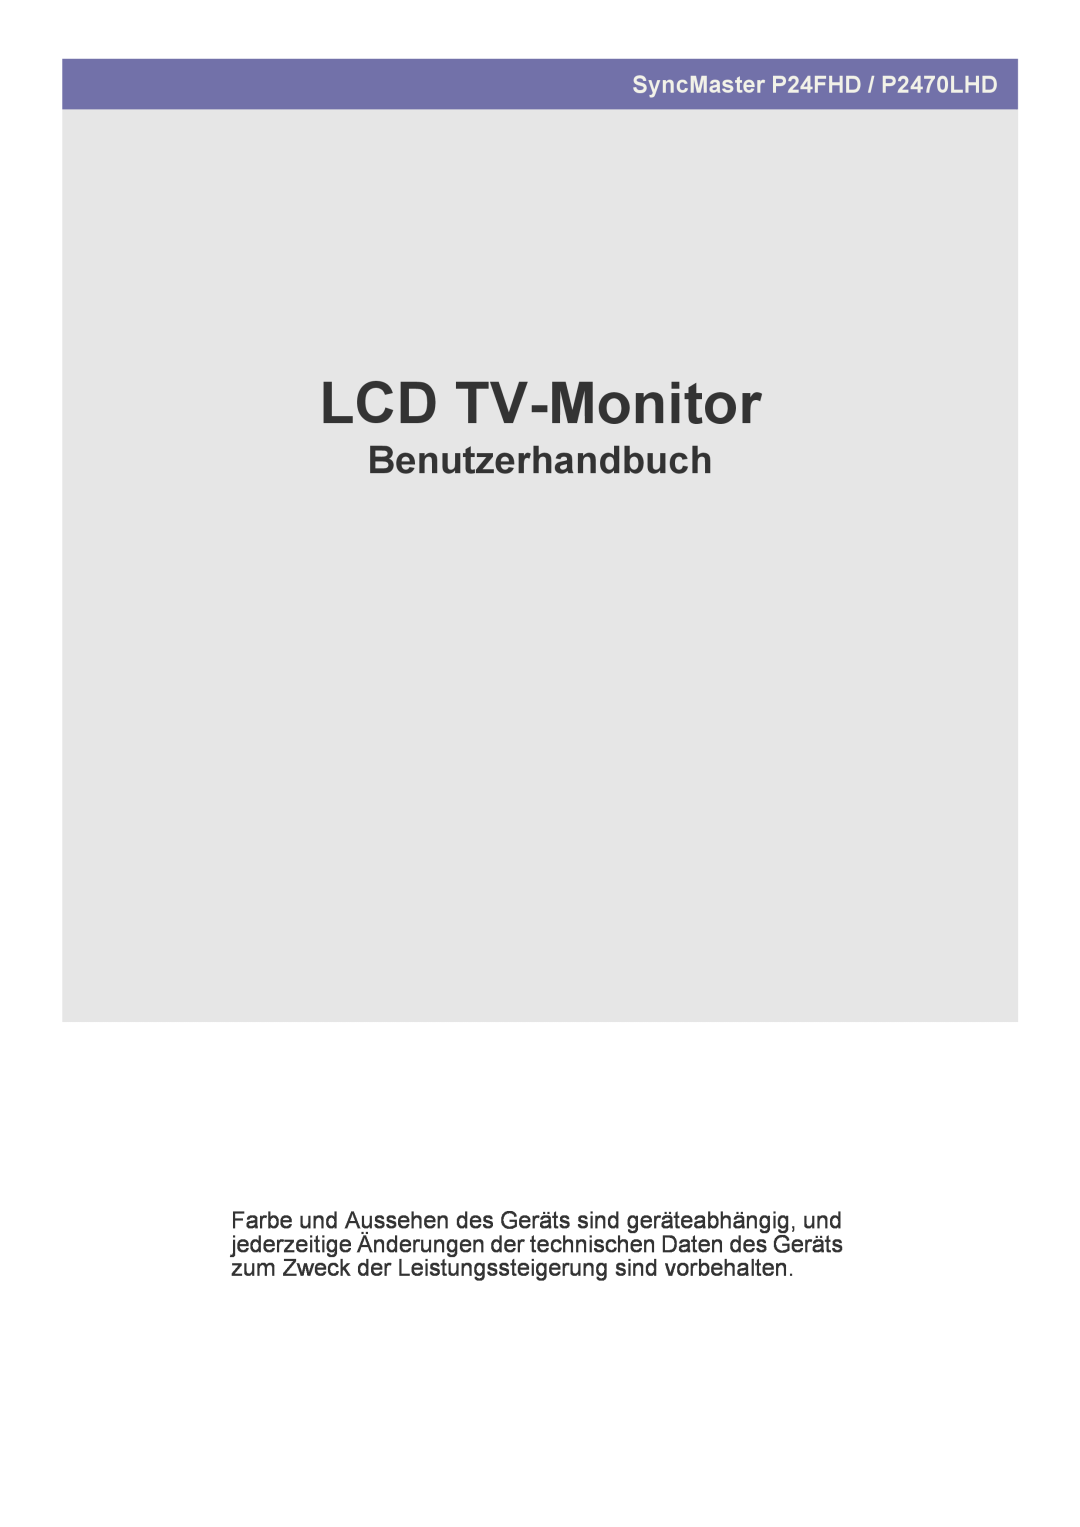 Samsung LS24EMLKF/EN manual LCD TV-Monitor, Benutzerhandbuch, SyncMaster P24FHD / P2470LHD 